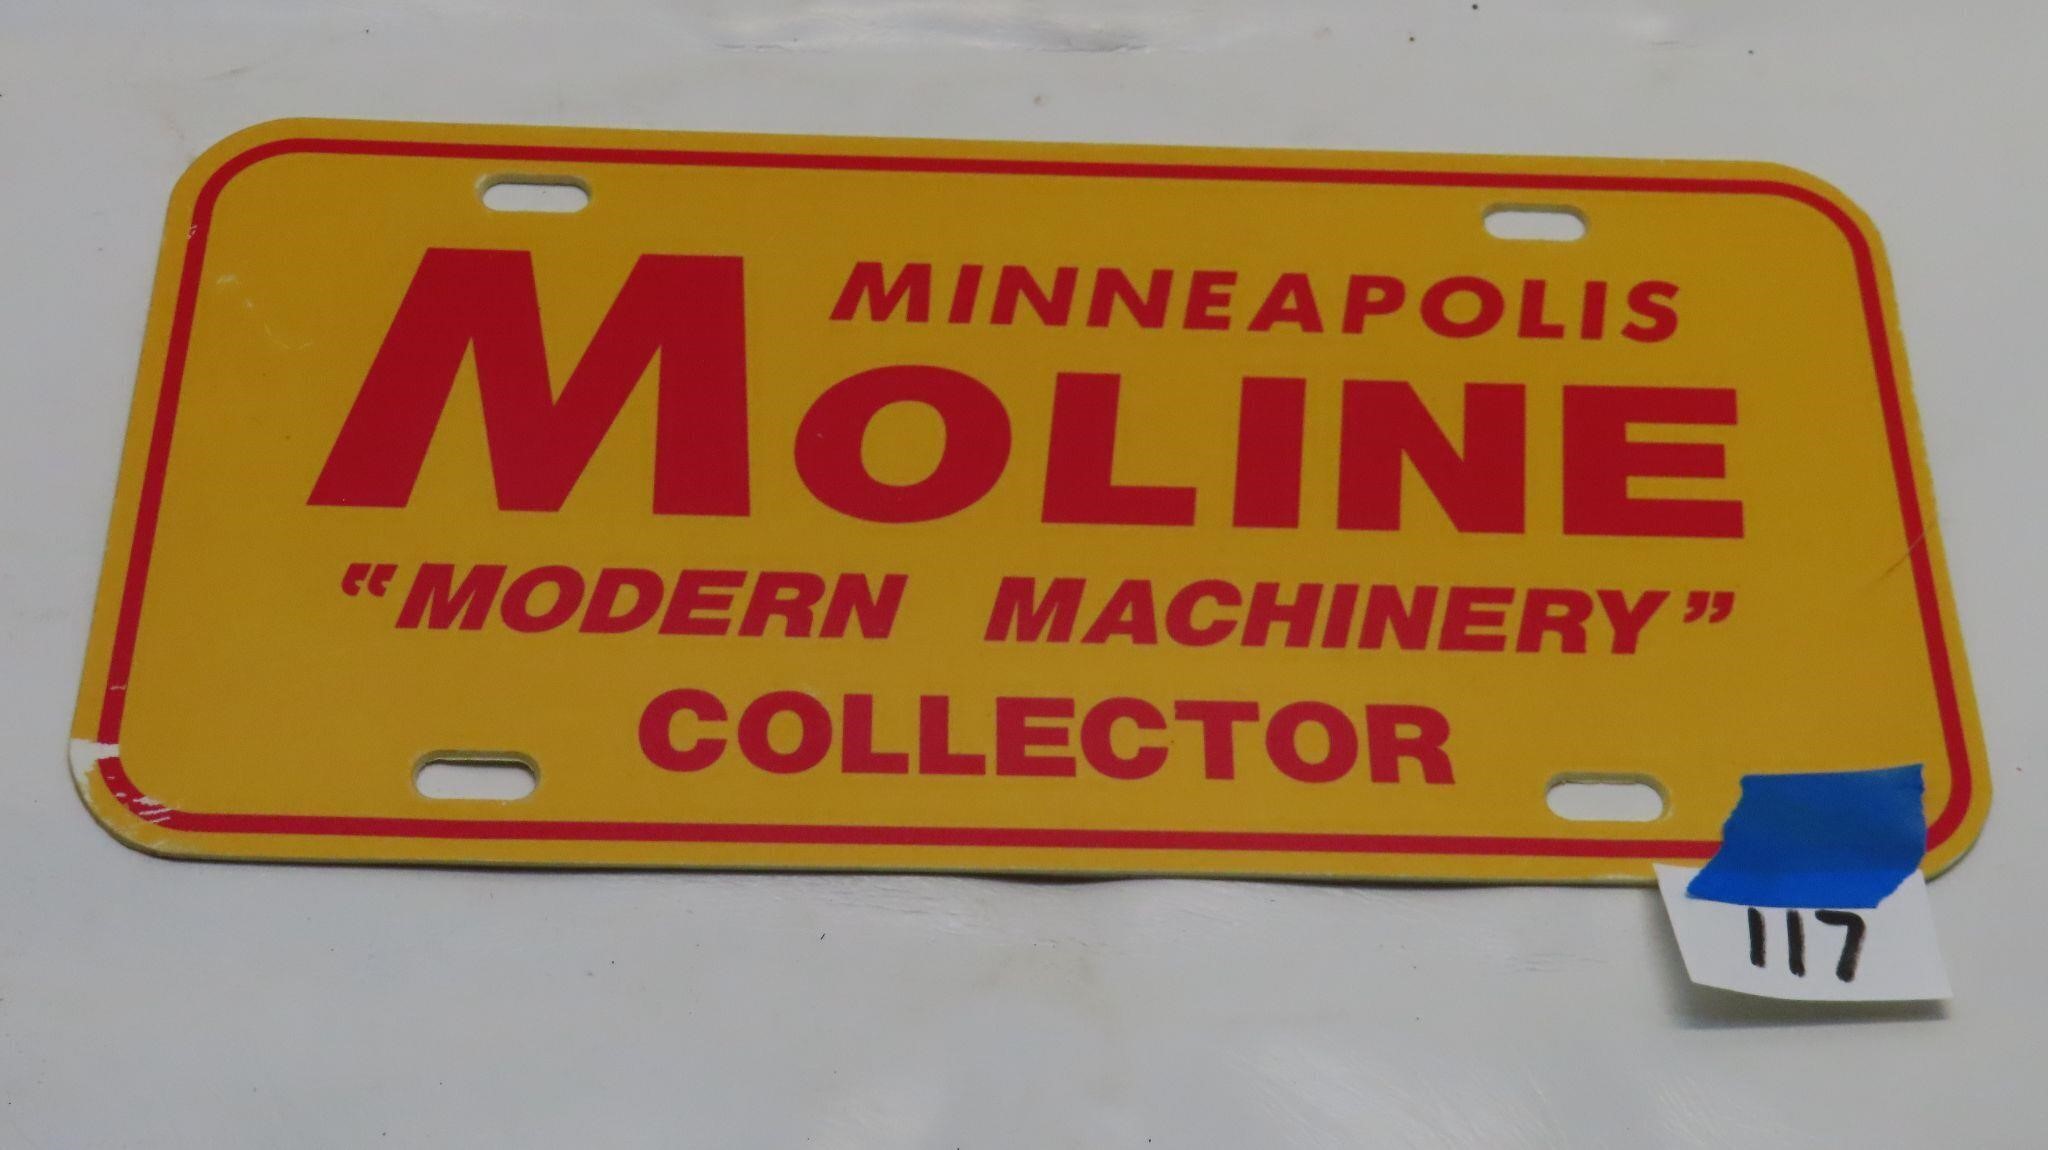 Minneapolis Moline metal license plate